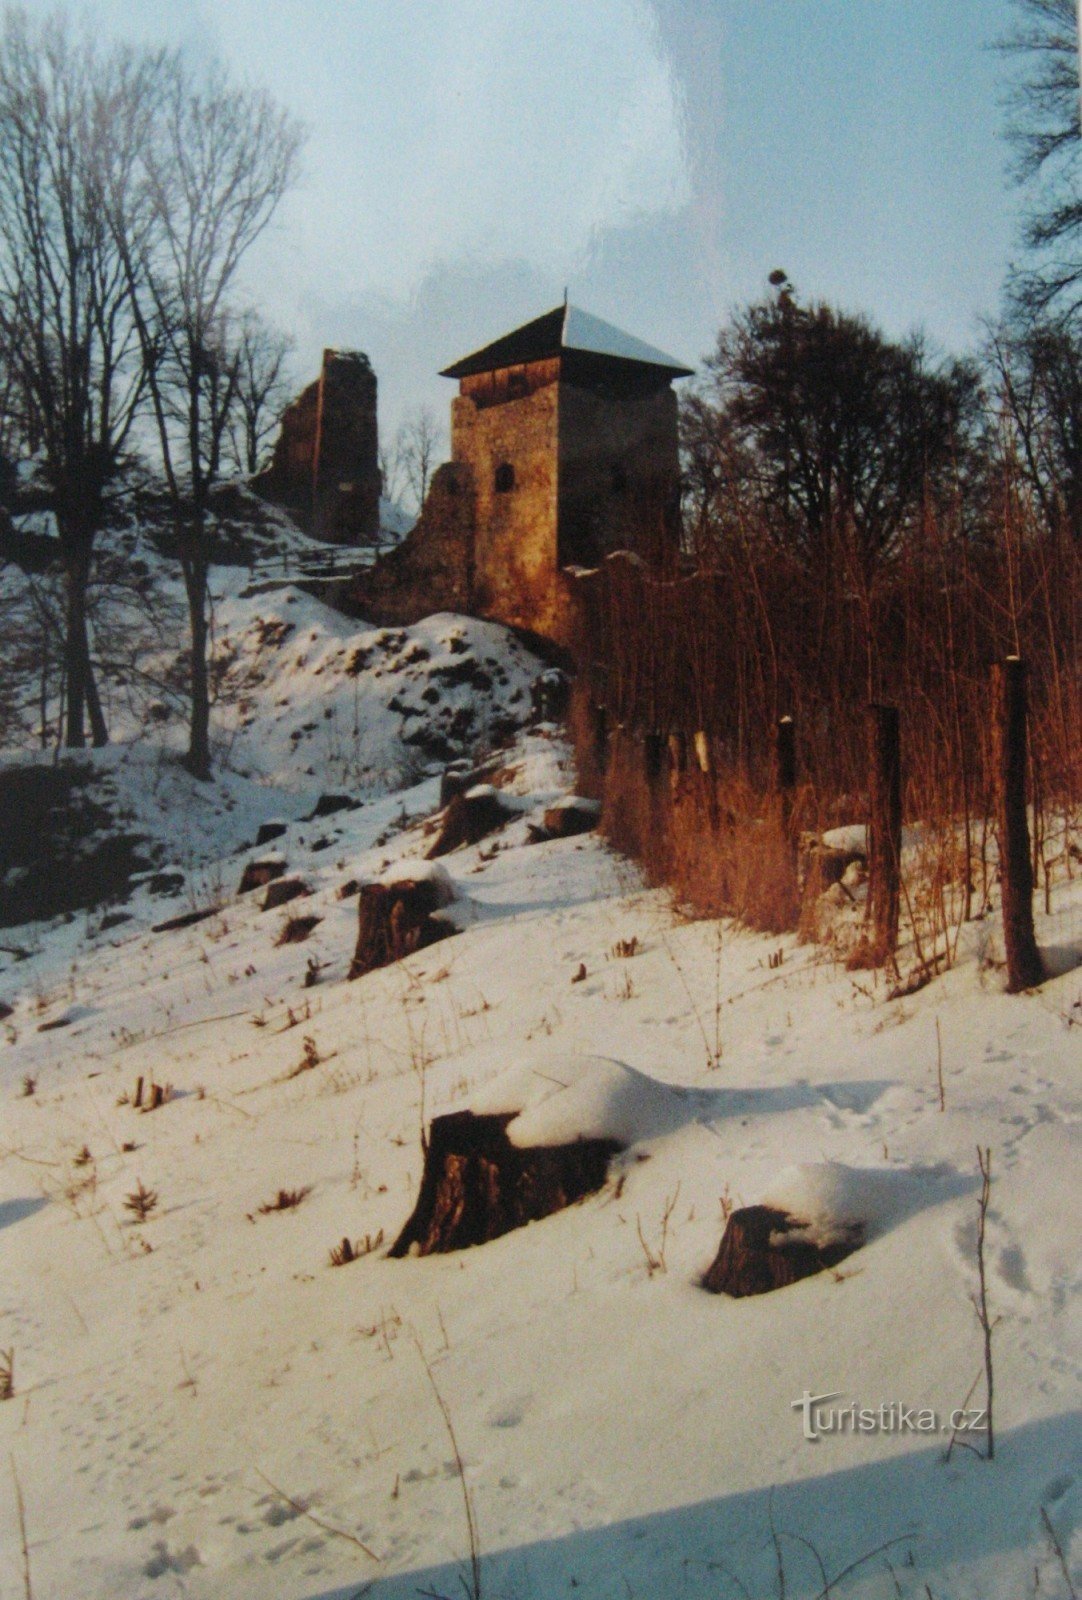 Wallachian winter at Lukovo Castle